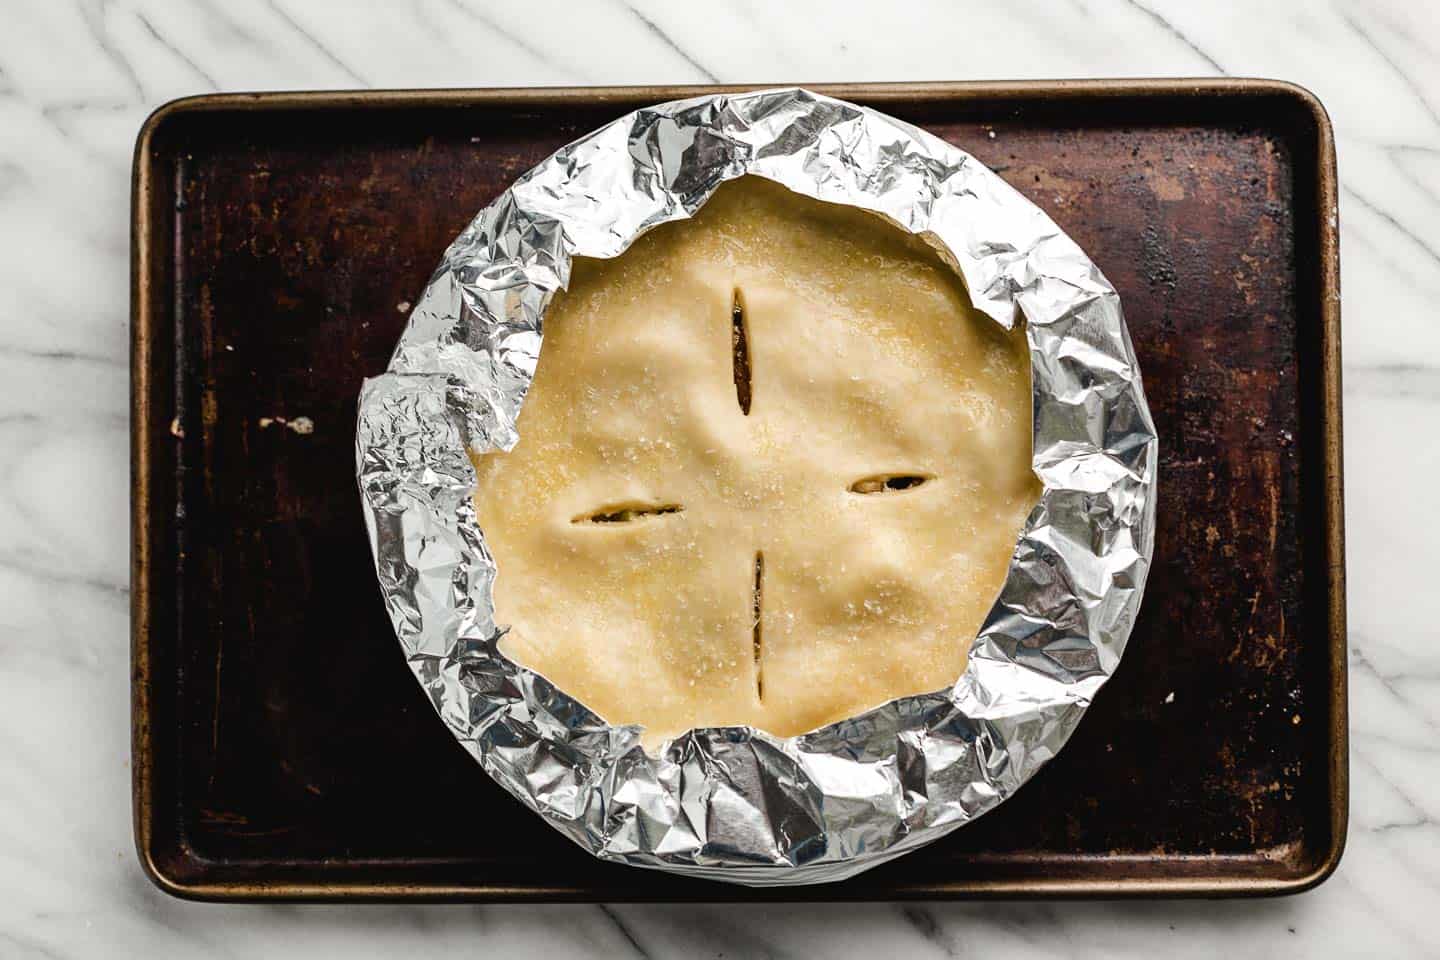 A pie crust with a pie shield wrapped around it.